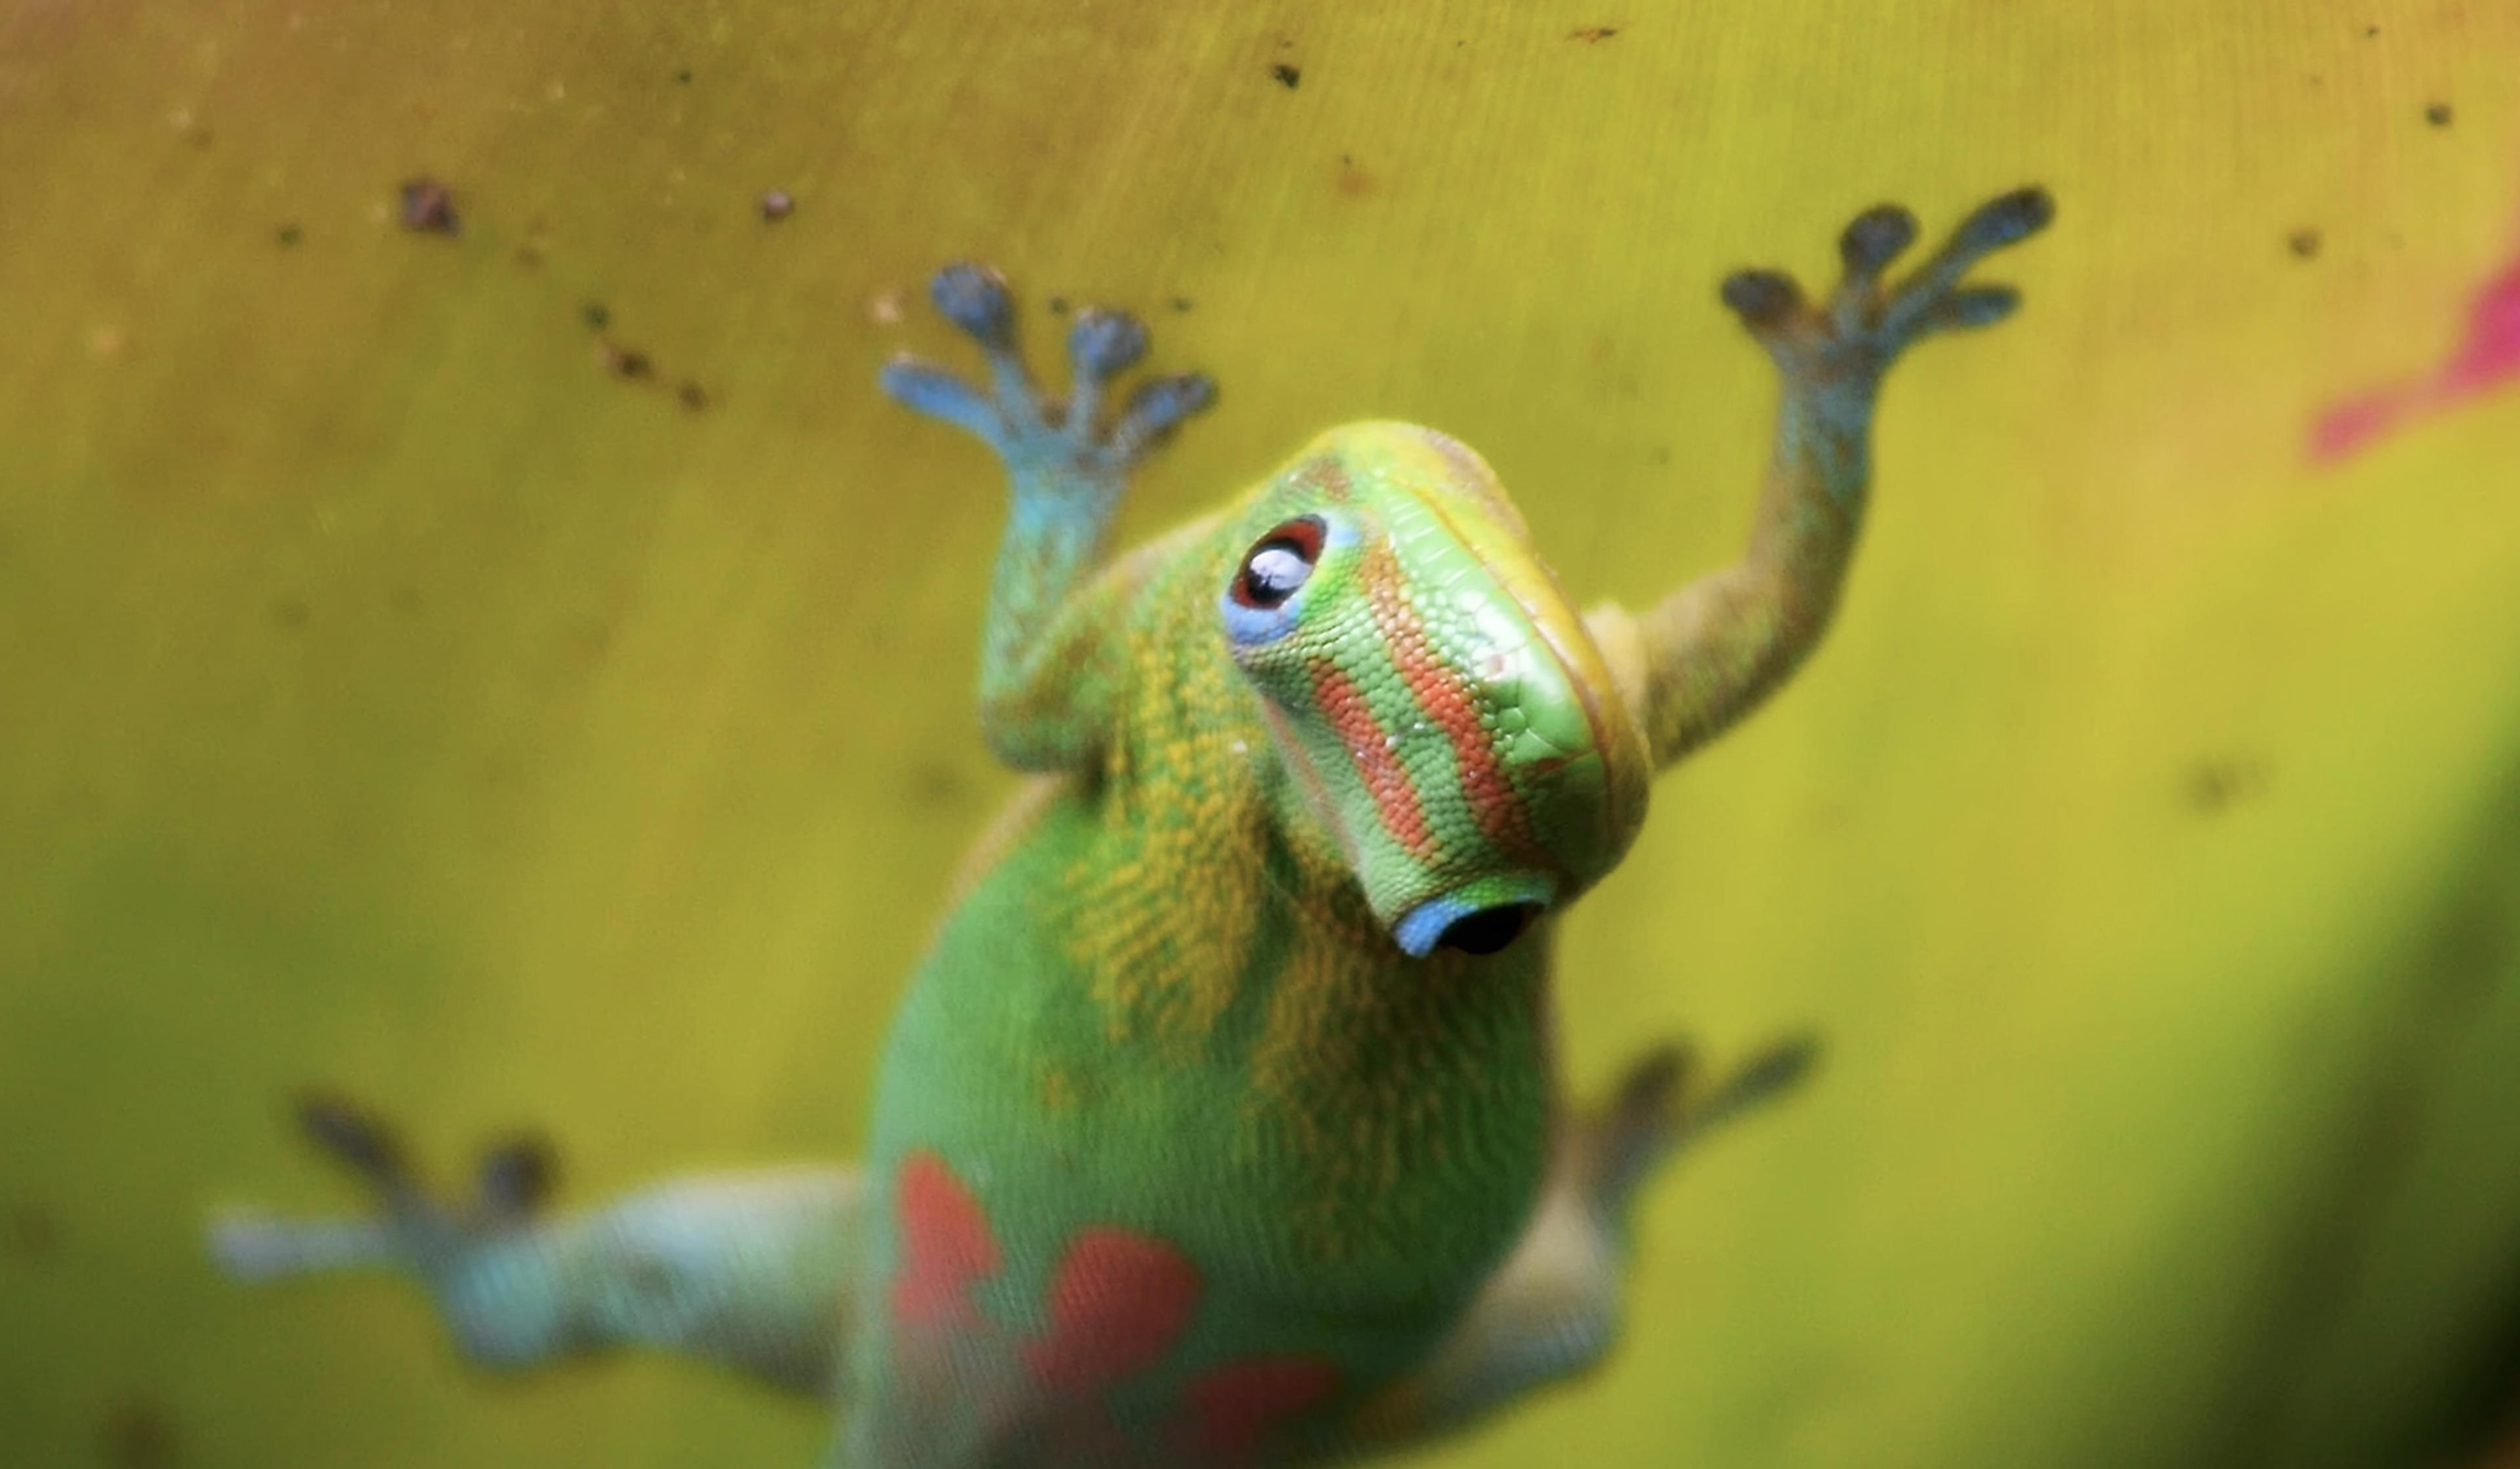 The key to geckos' unrivalled climbing skills isn't sticky feet